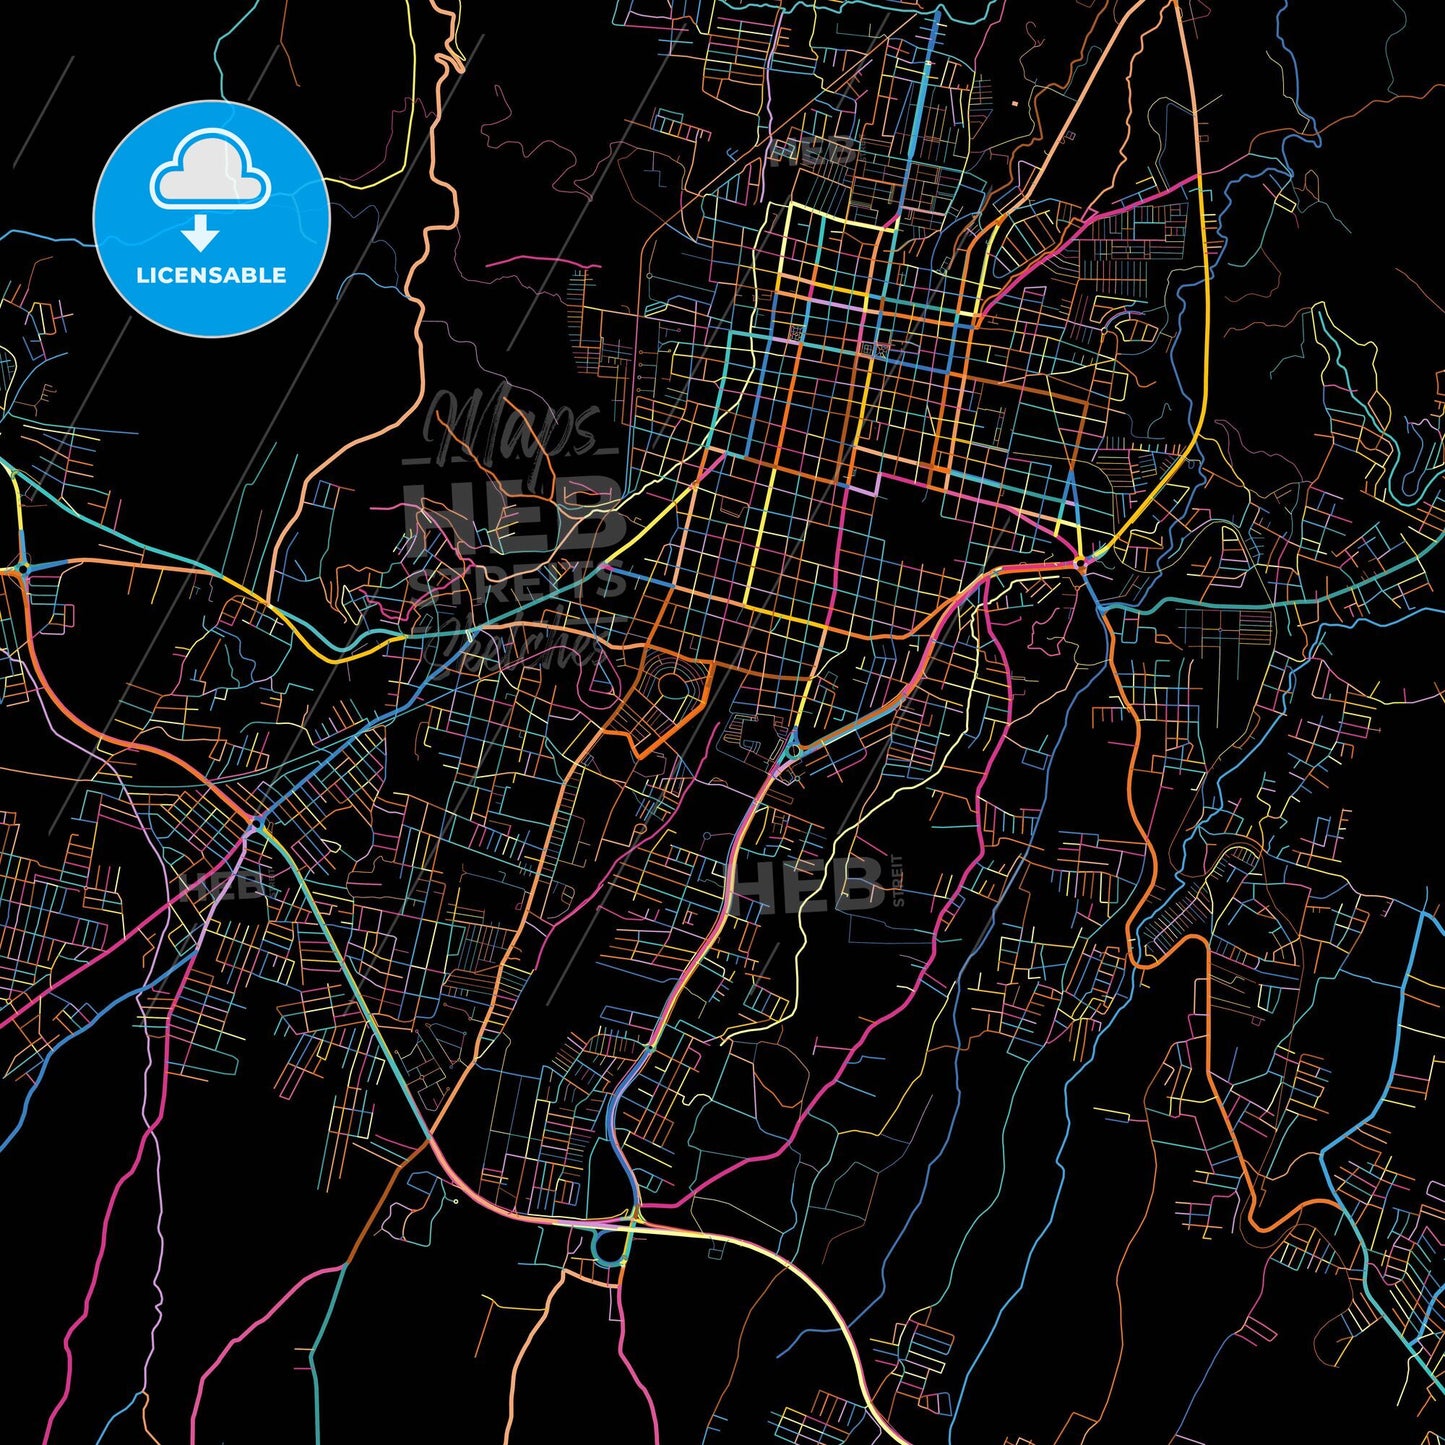 Santa Ana, Santa Ana, El Salvador, colorful city map on black background